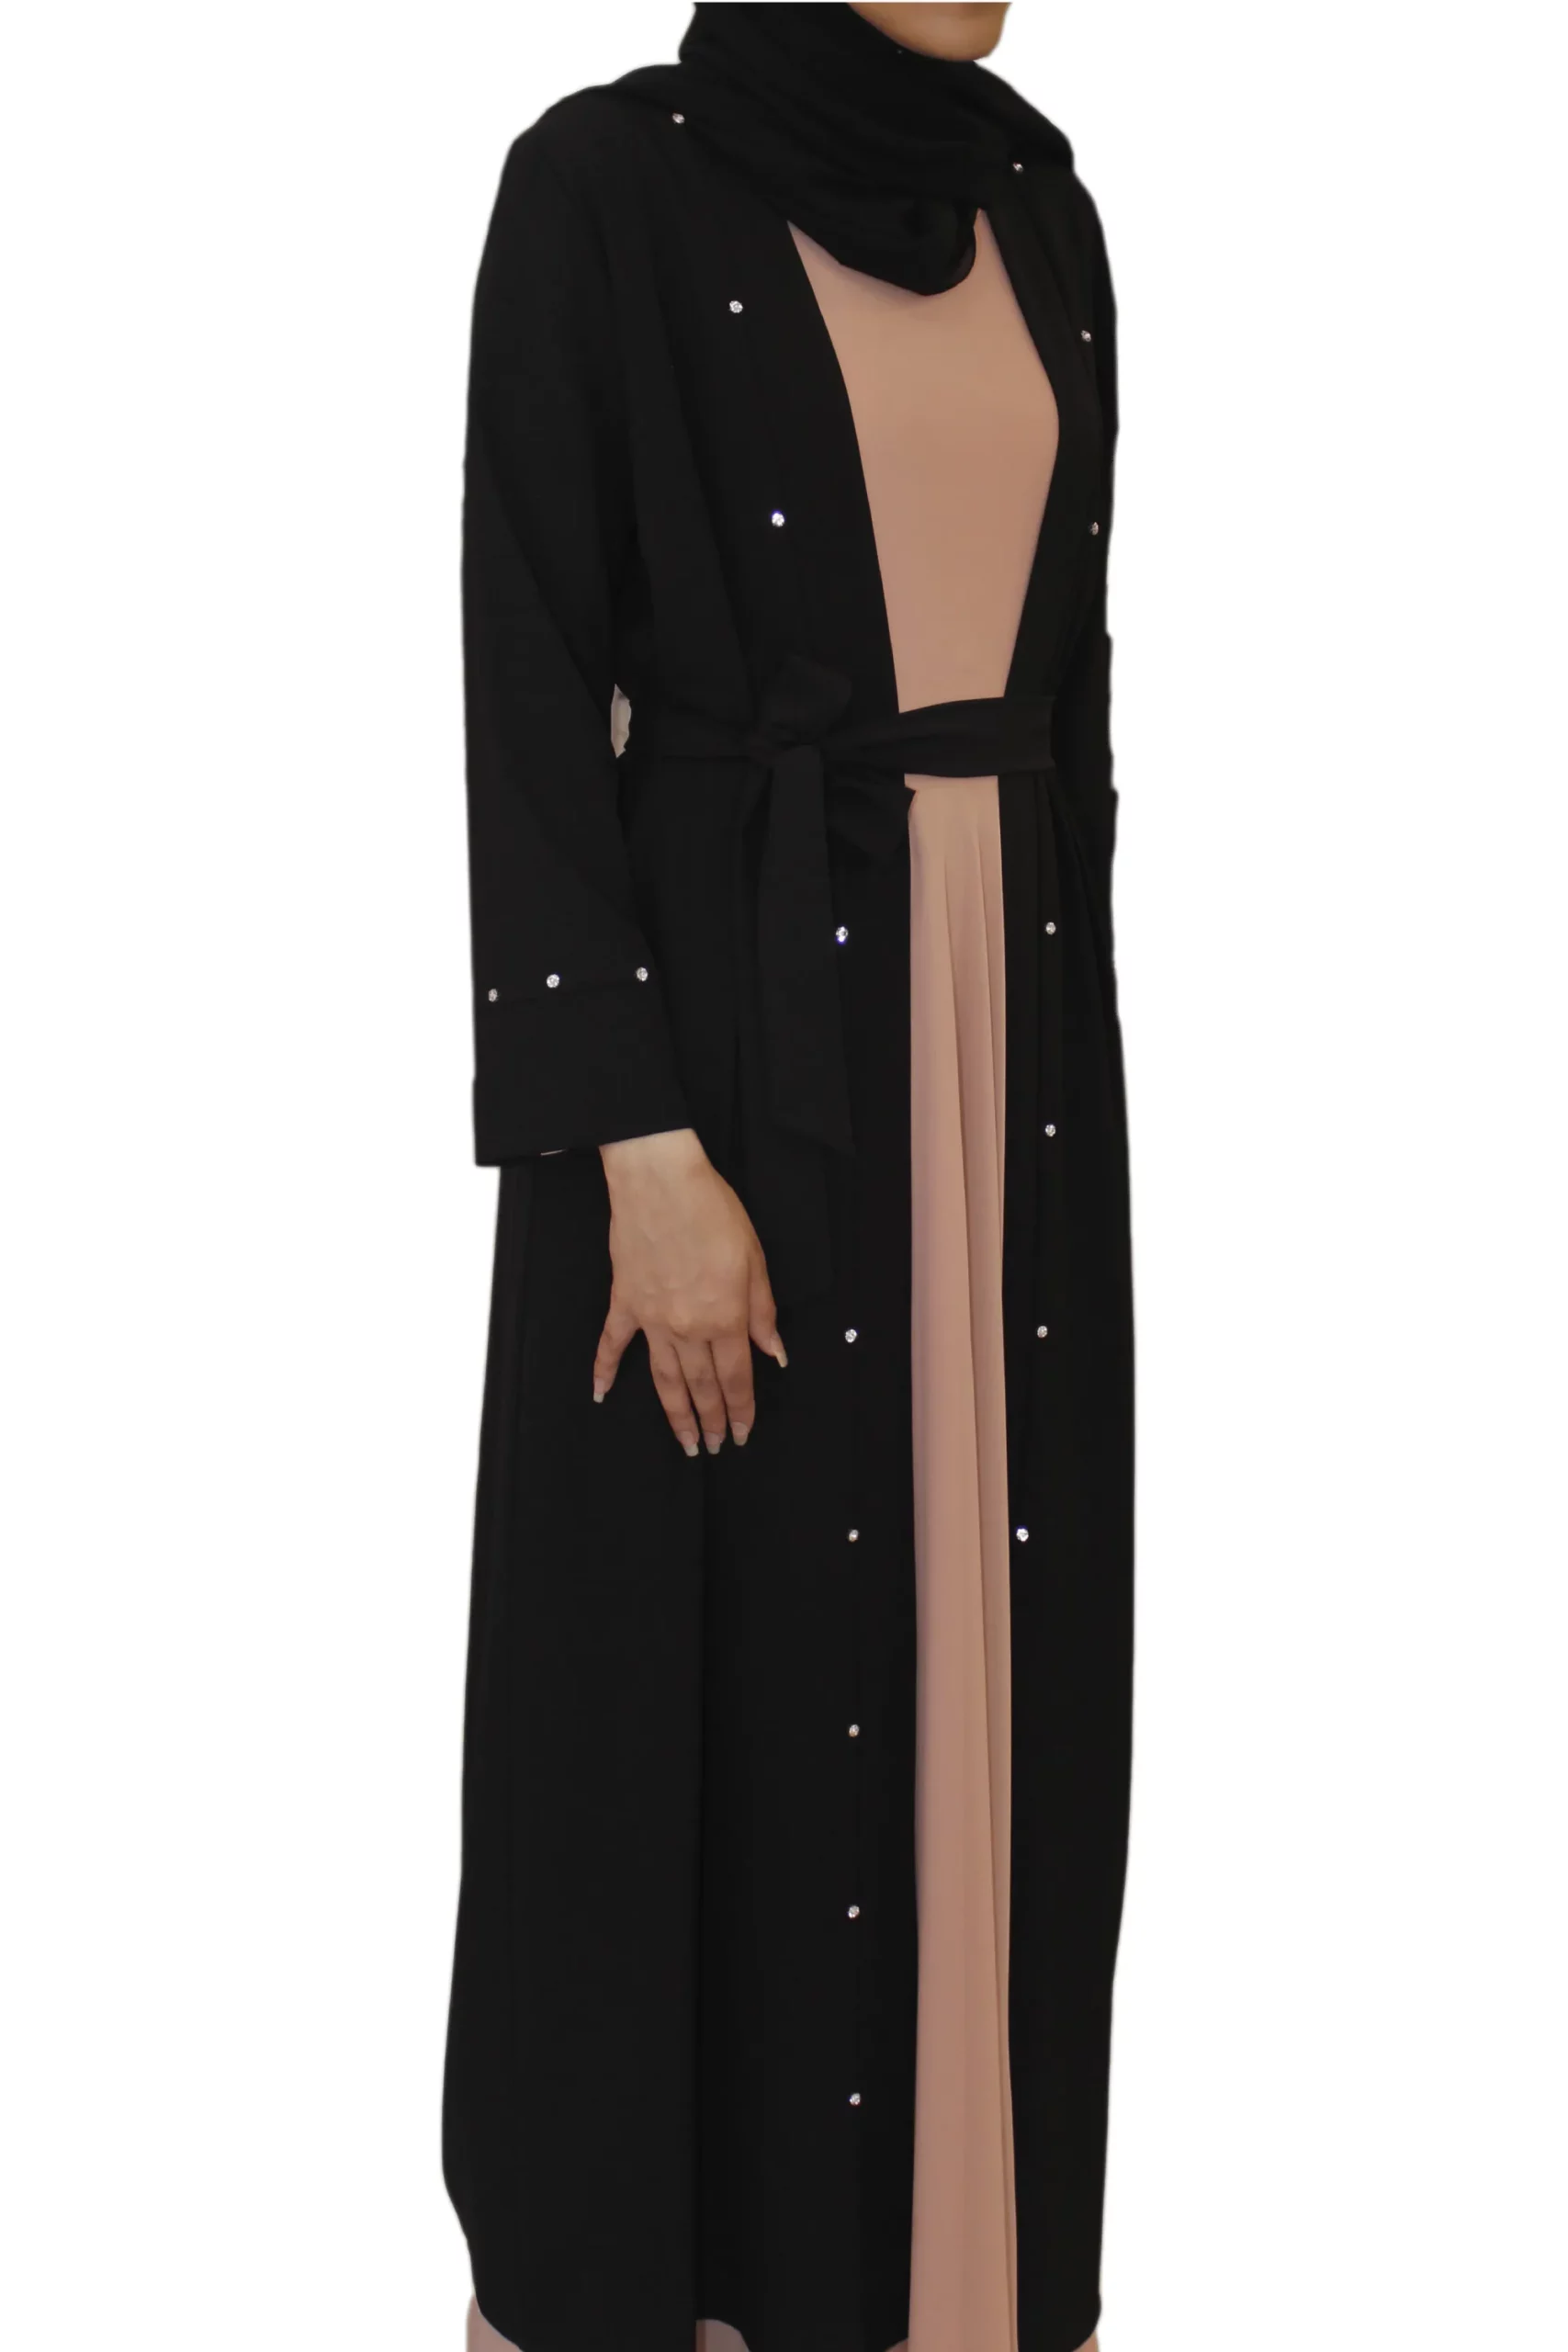 Laila Black Kimono Abaya